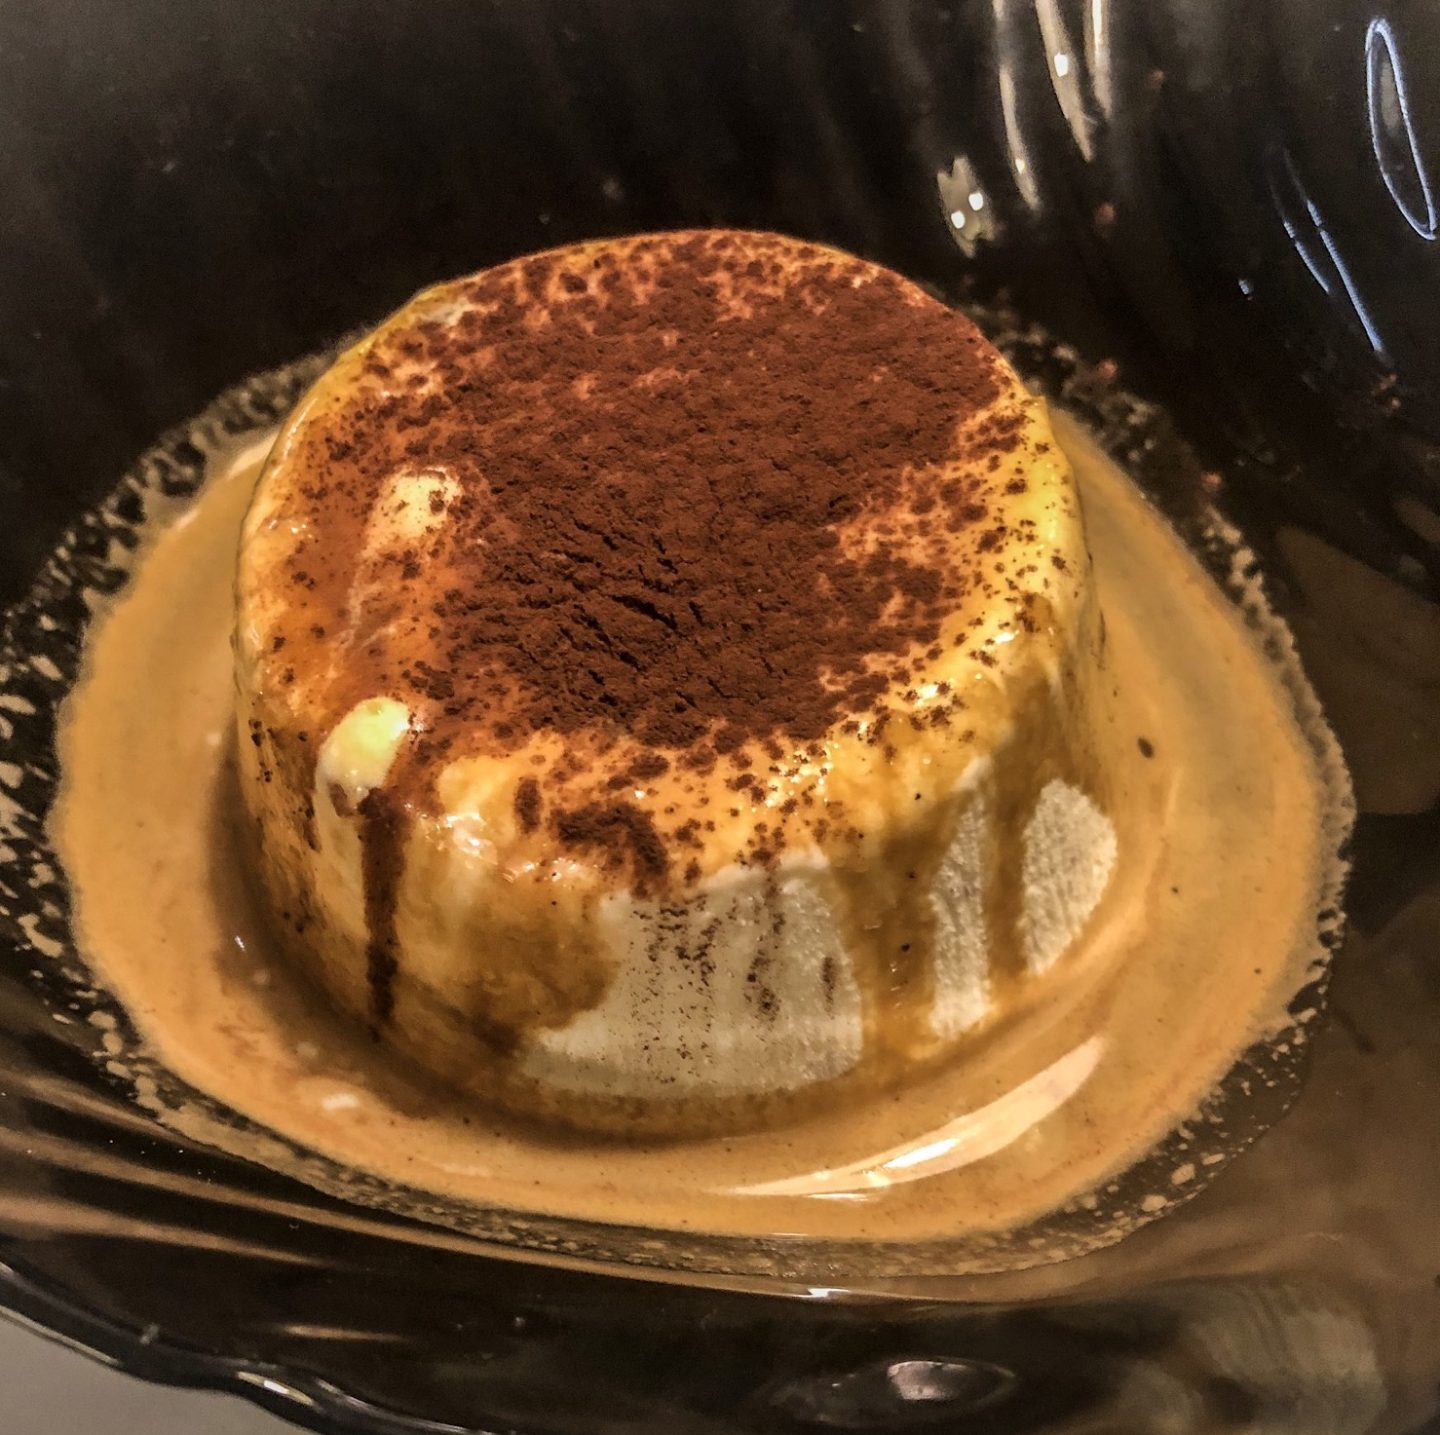 Eating affrogato vanilla gelato with espresso and a chocolate dusting in trento trentino